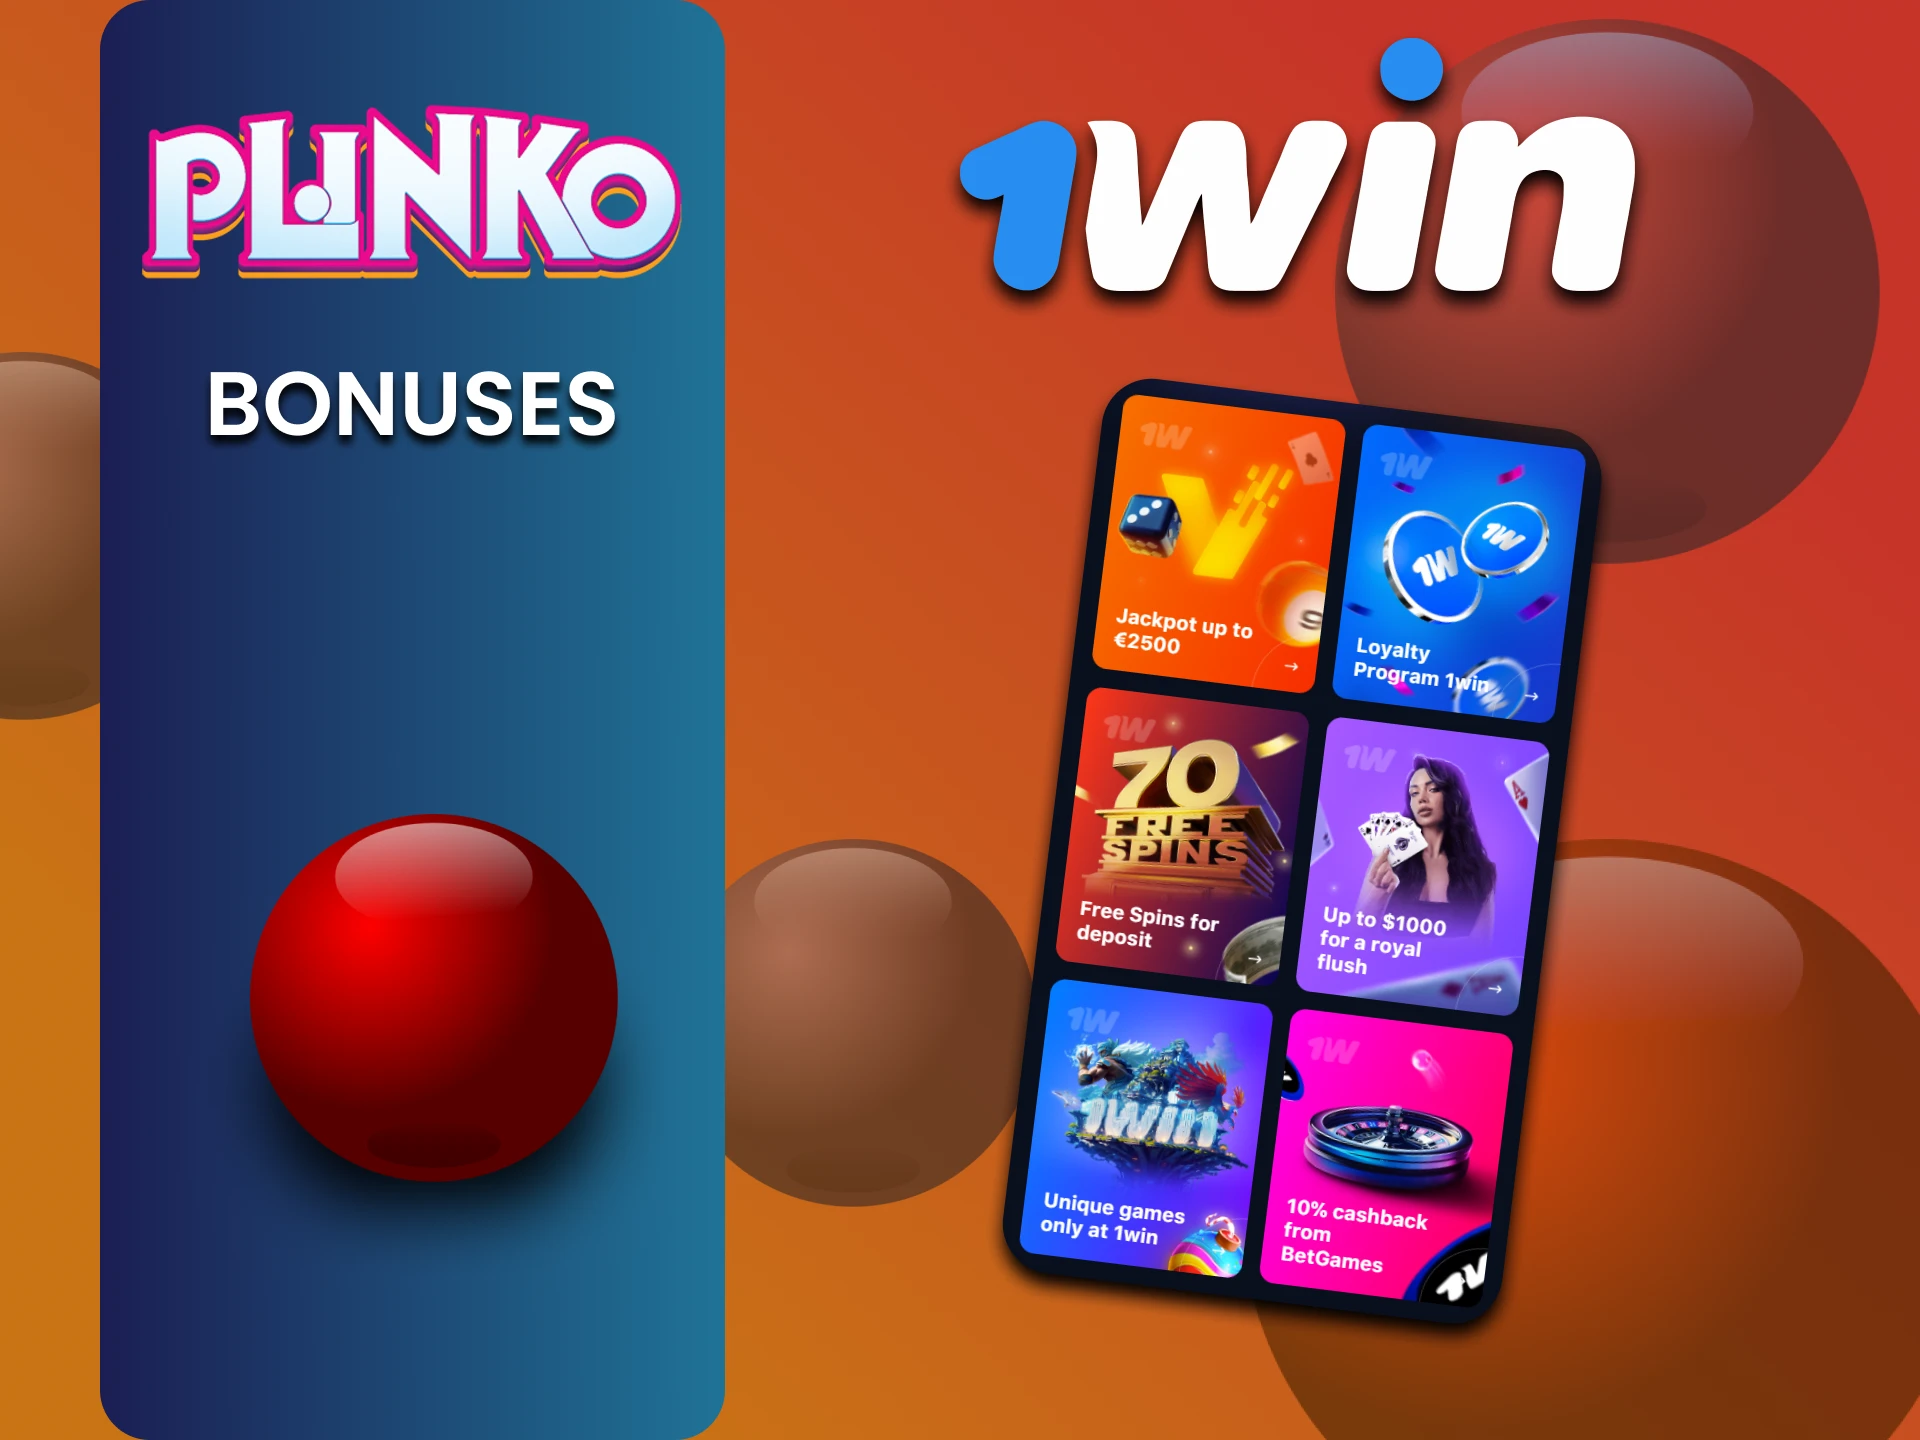 Get bonuses for Plinko from 1win.